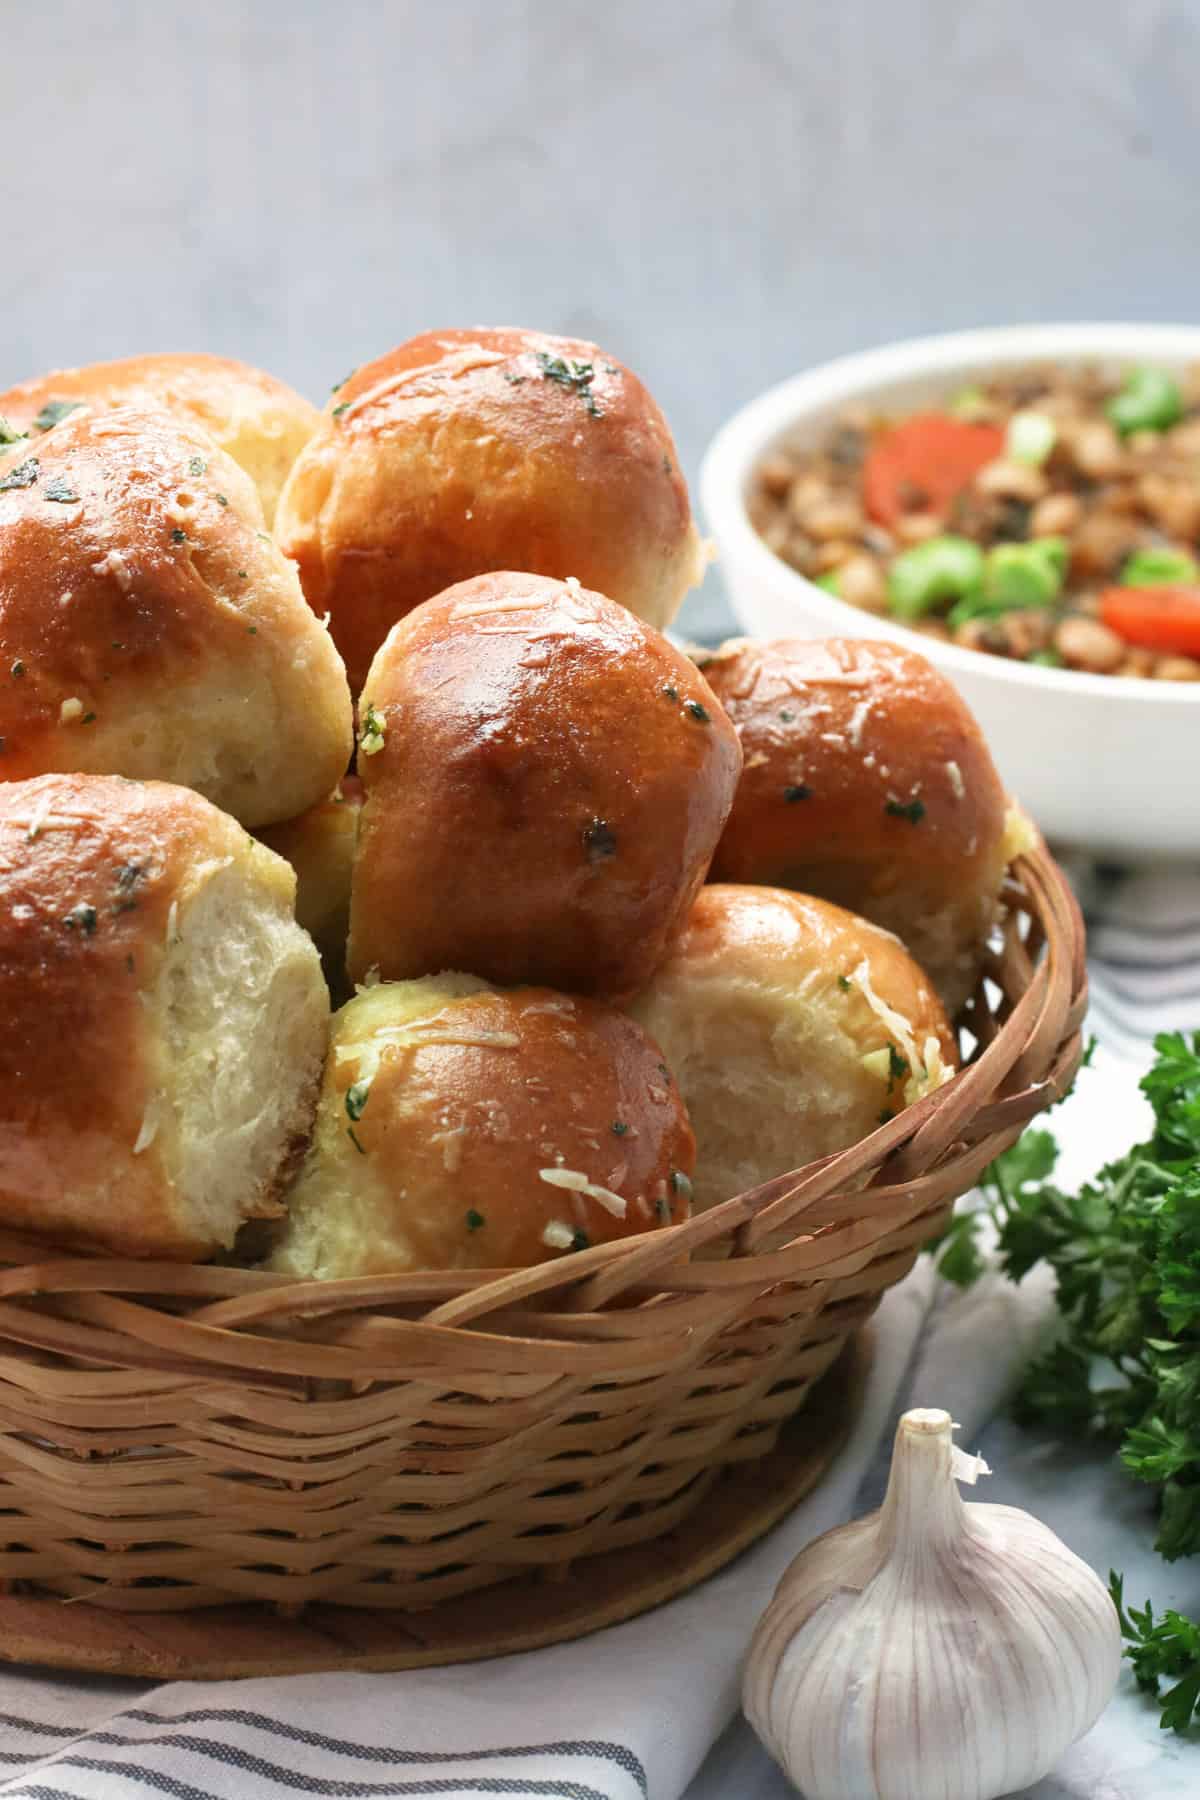 Delicious pull-apart garlic bread rolls in a basket